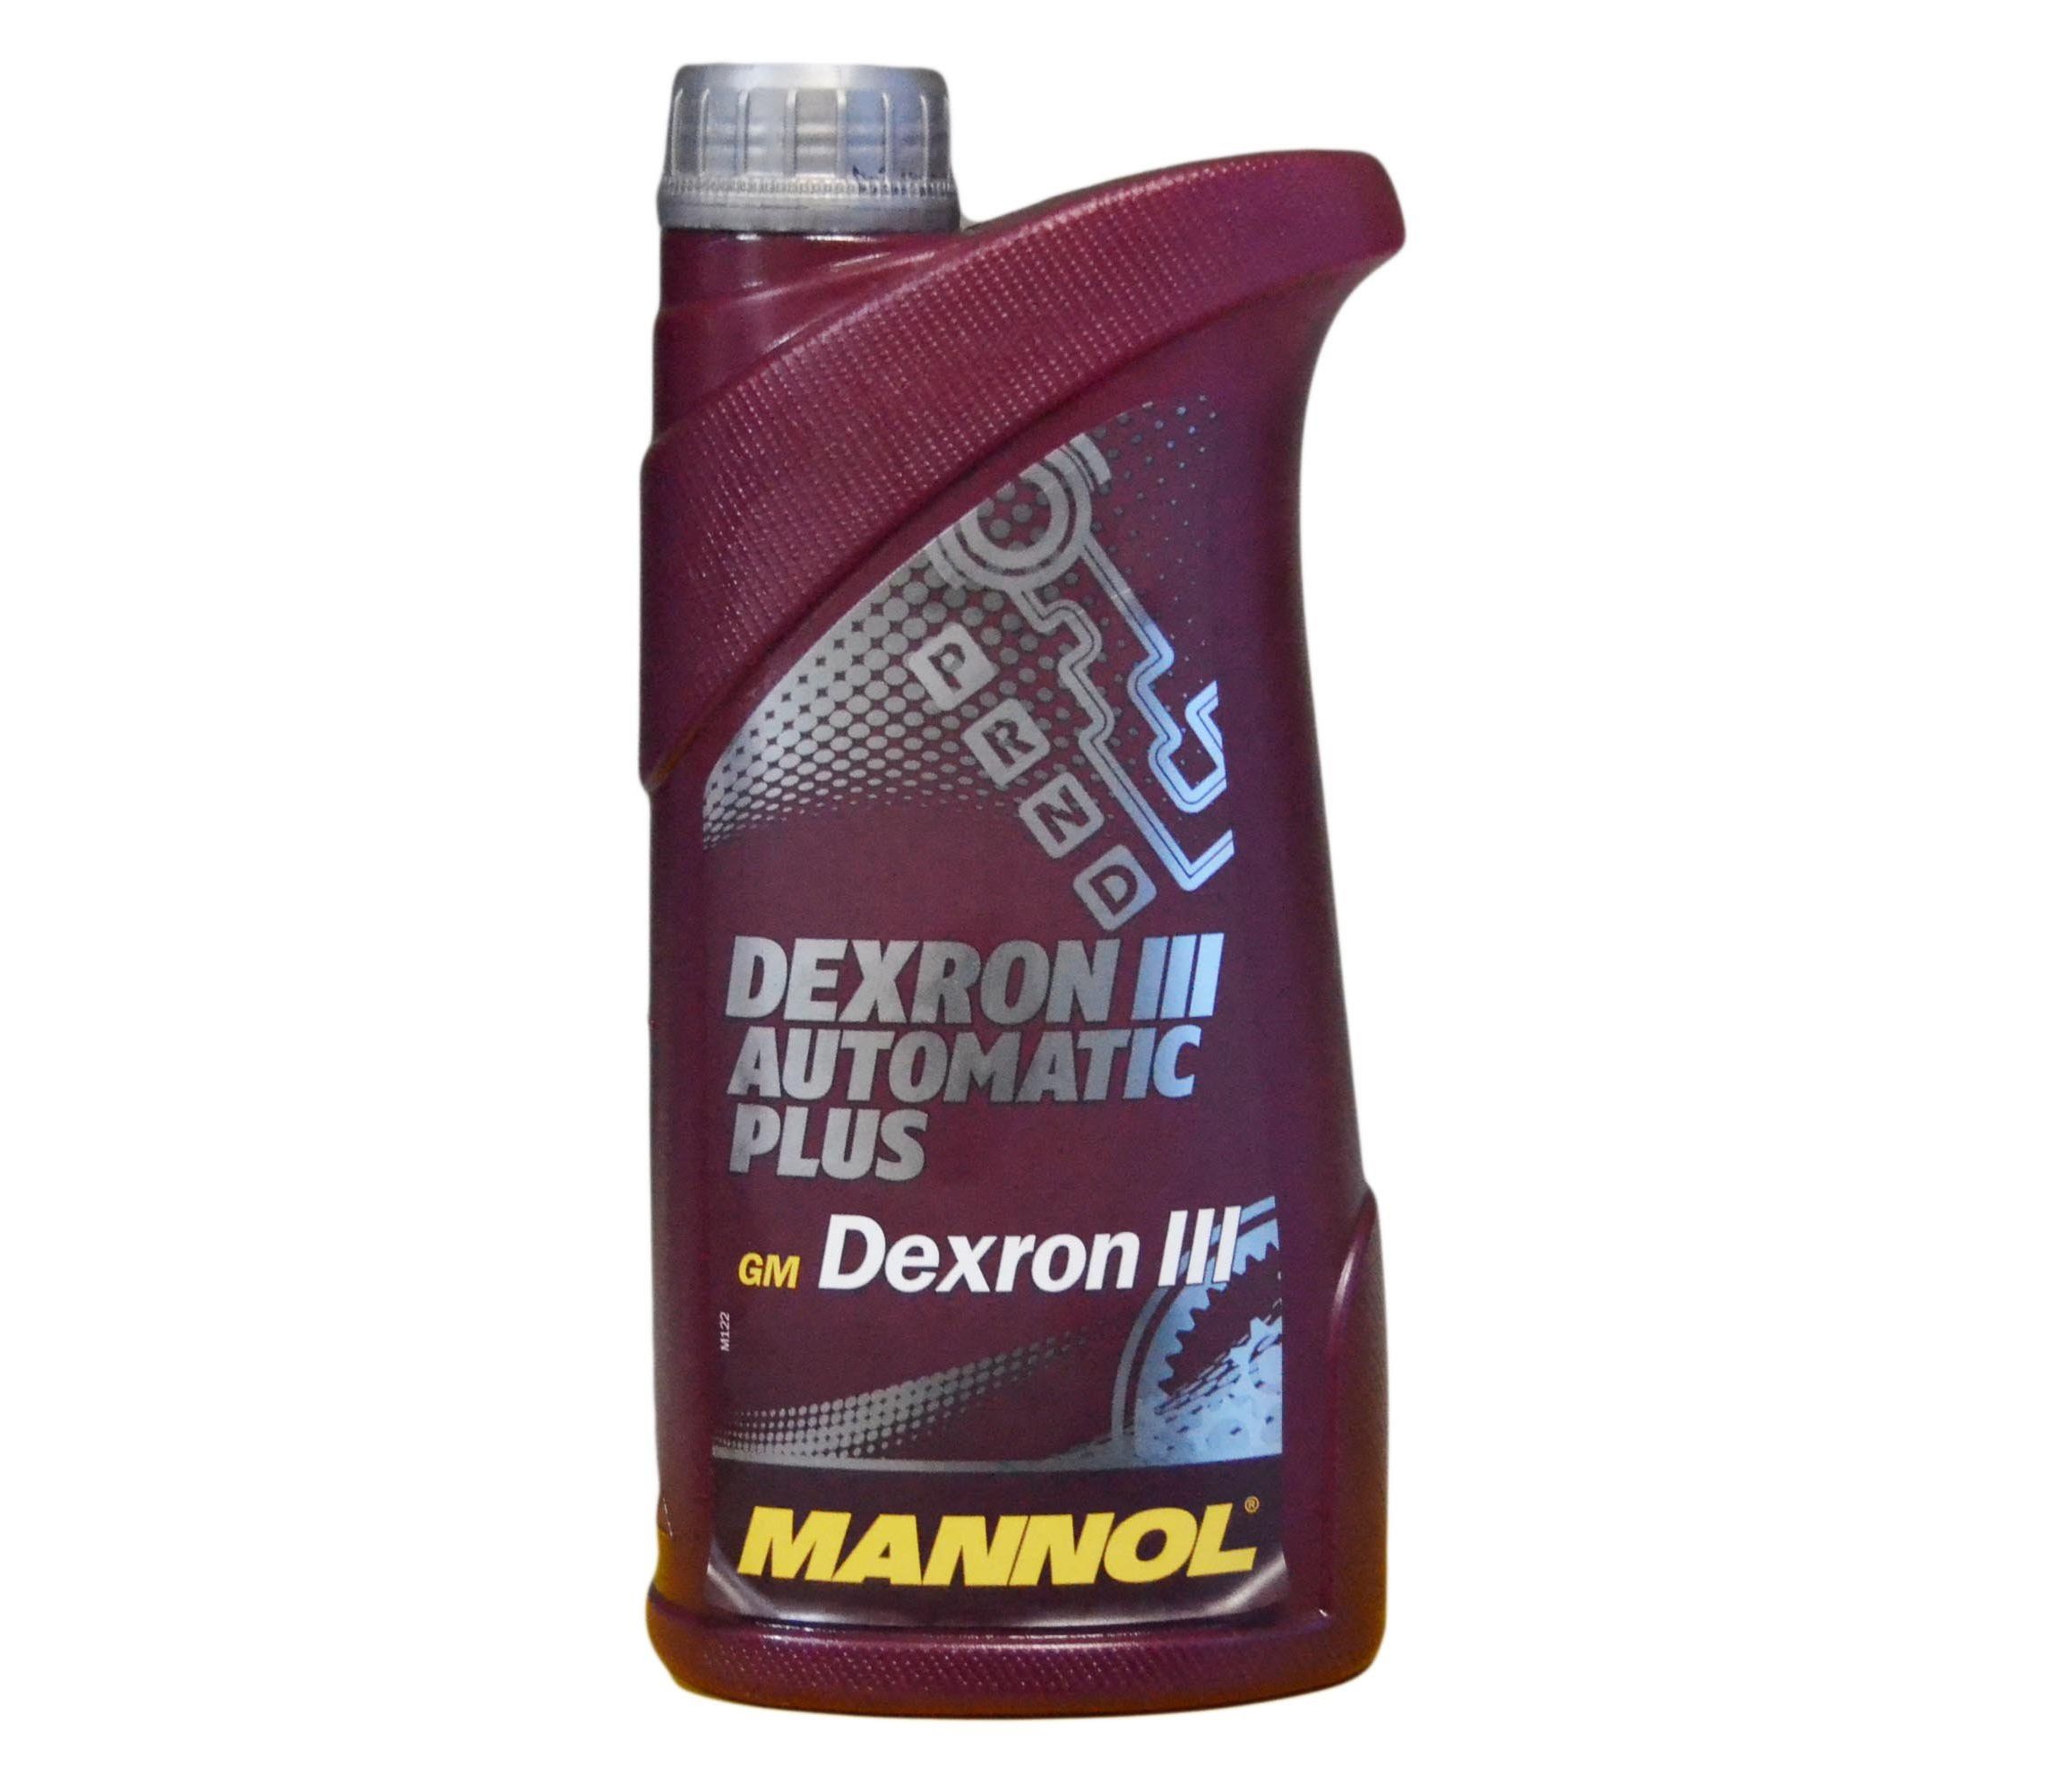 Atf dexron 1. Трансмиссионное масло Mannol Dexron III Automatic Plus 1л. Mannol Dexron III Automatic Plus 1 л. Декстрон 3 для ГУРА Манол. Mannol Dexron 3 Automatic Plus 8206.